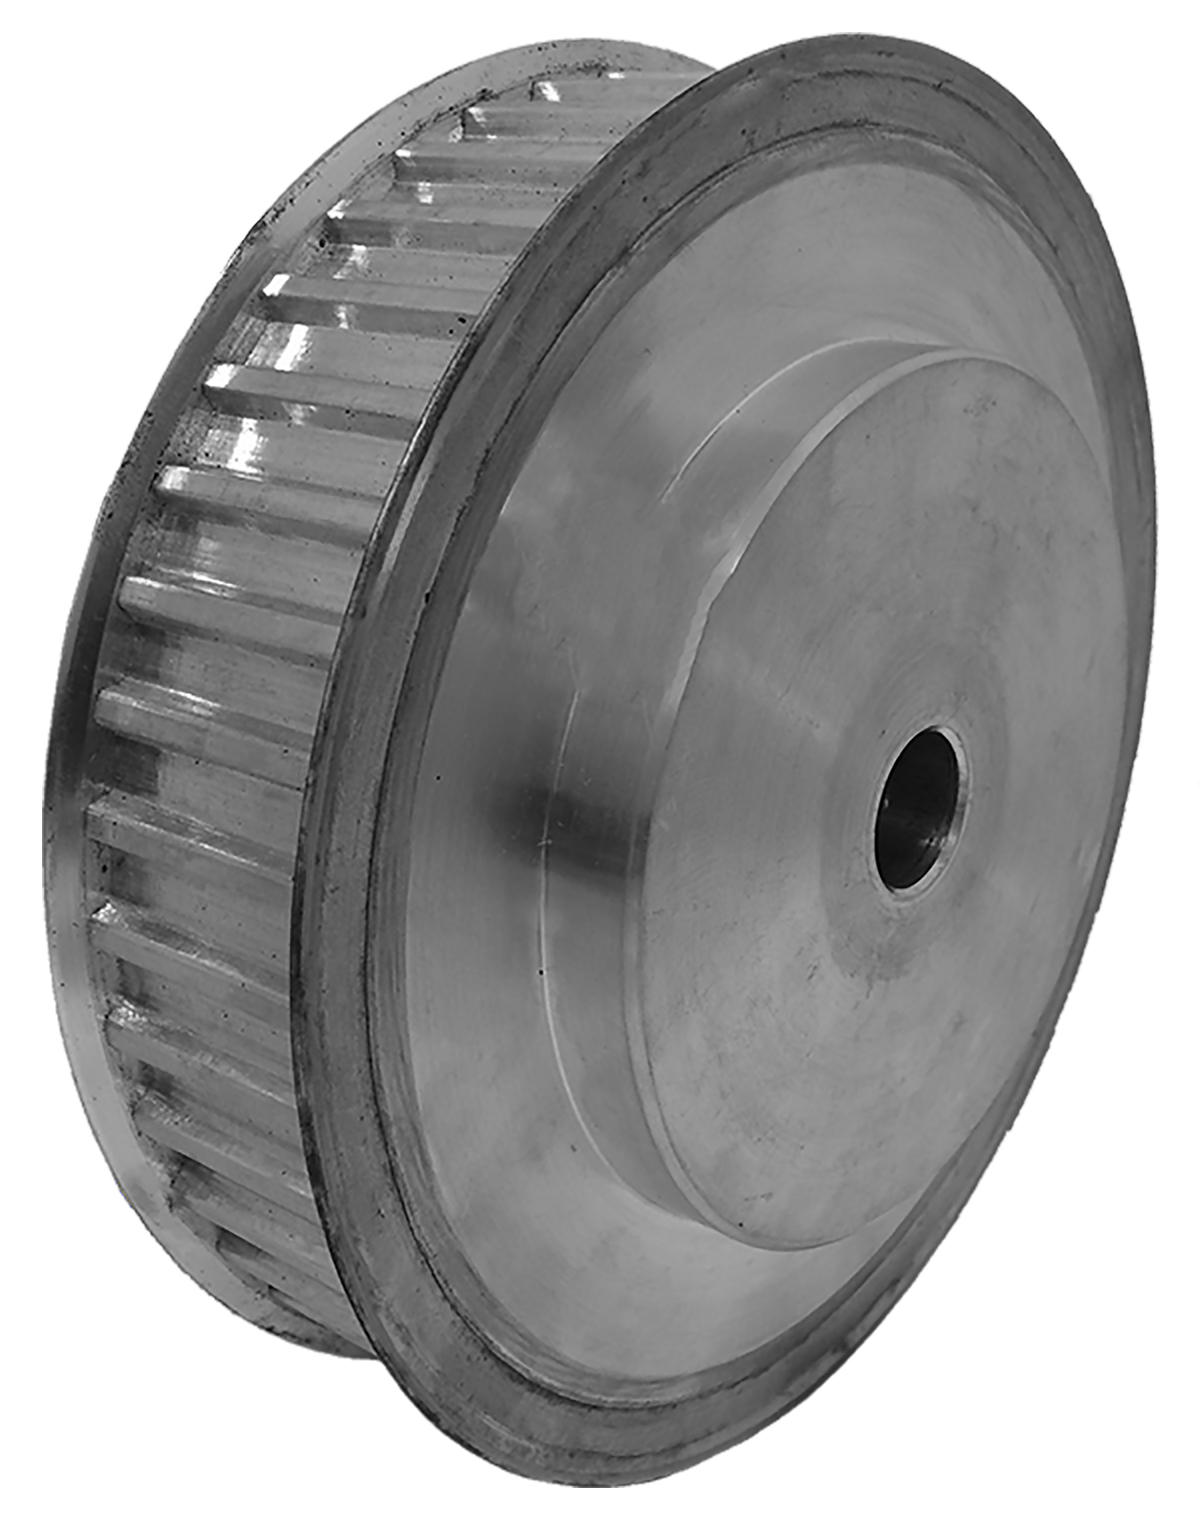 42AT10/44-2 - Aluminum Metric Pulleys